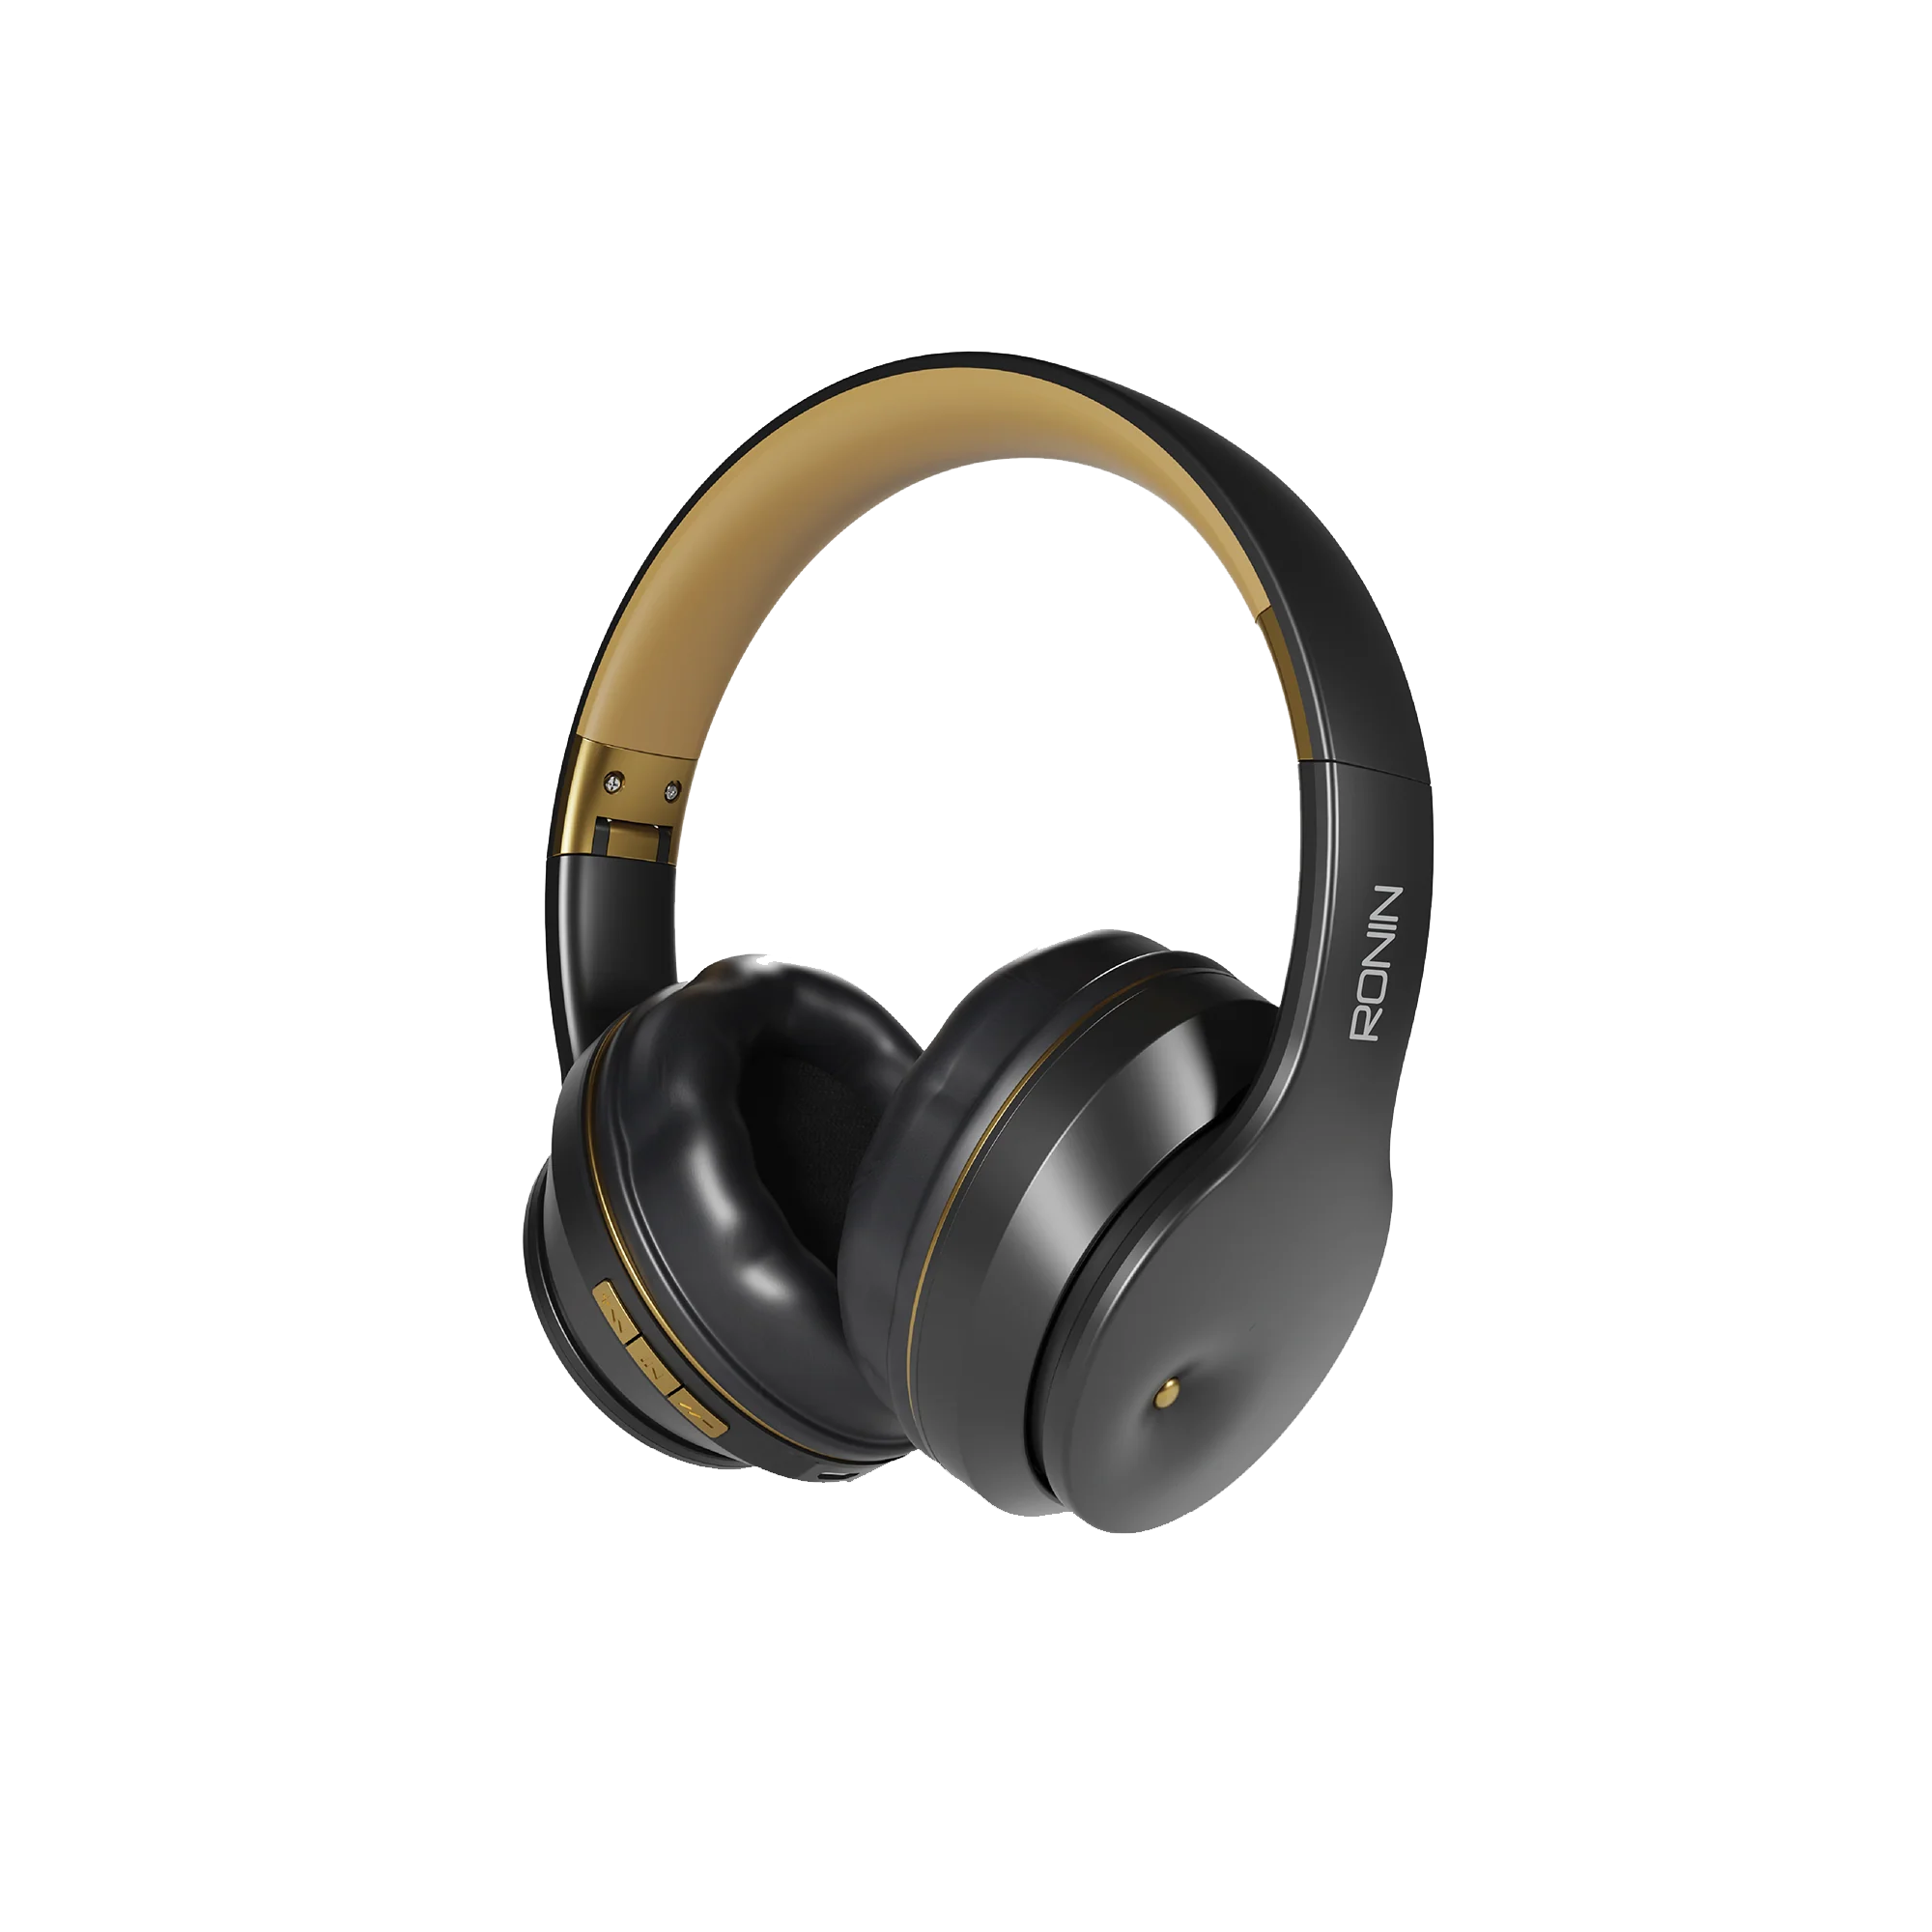 Ronin R-7700 Thunder Beast Wireless Over-Ear Headphones - Durable Sound, Deep Bass, Bluetooth 5.0